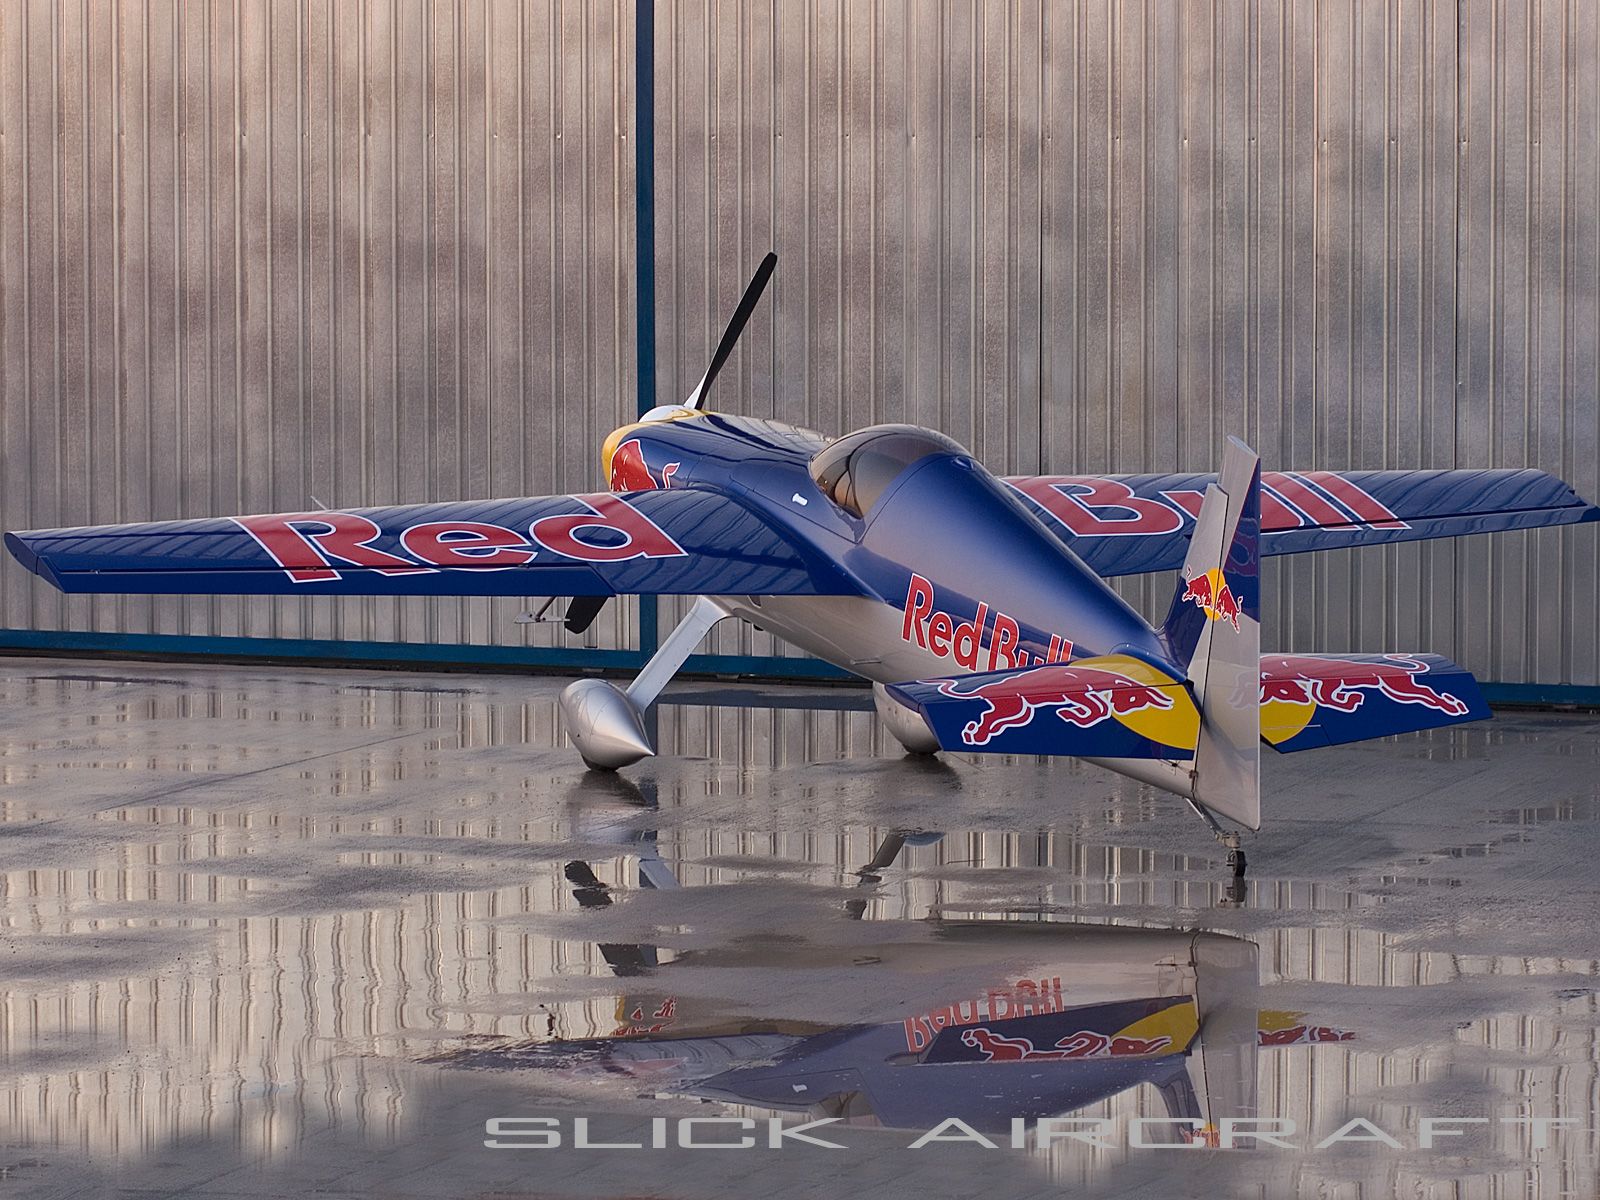 Slick Aircraft Wallpaper The Ultimate Edge In Aerobatic